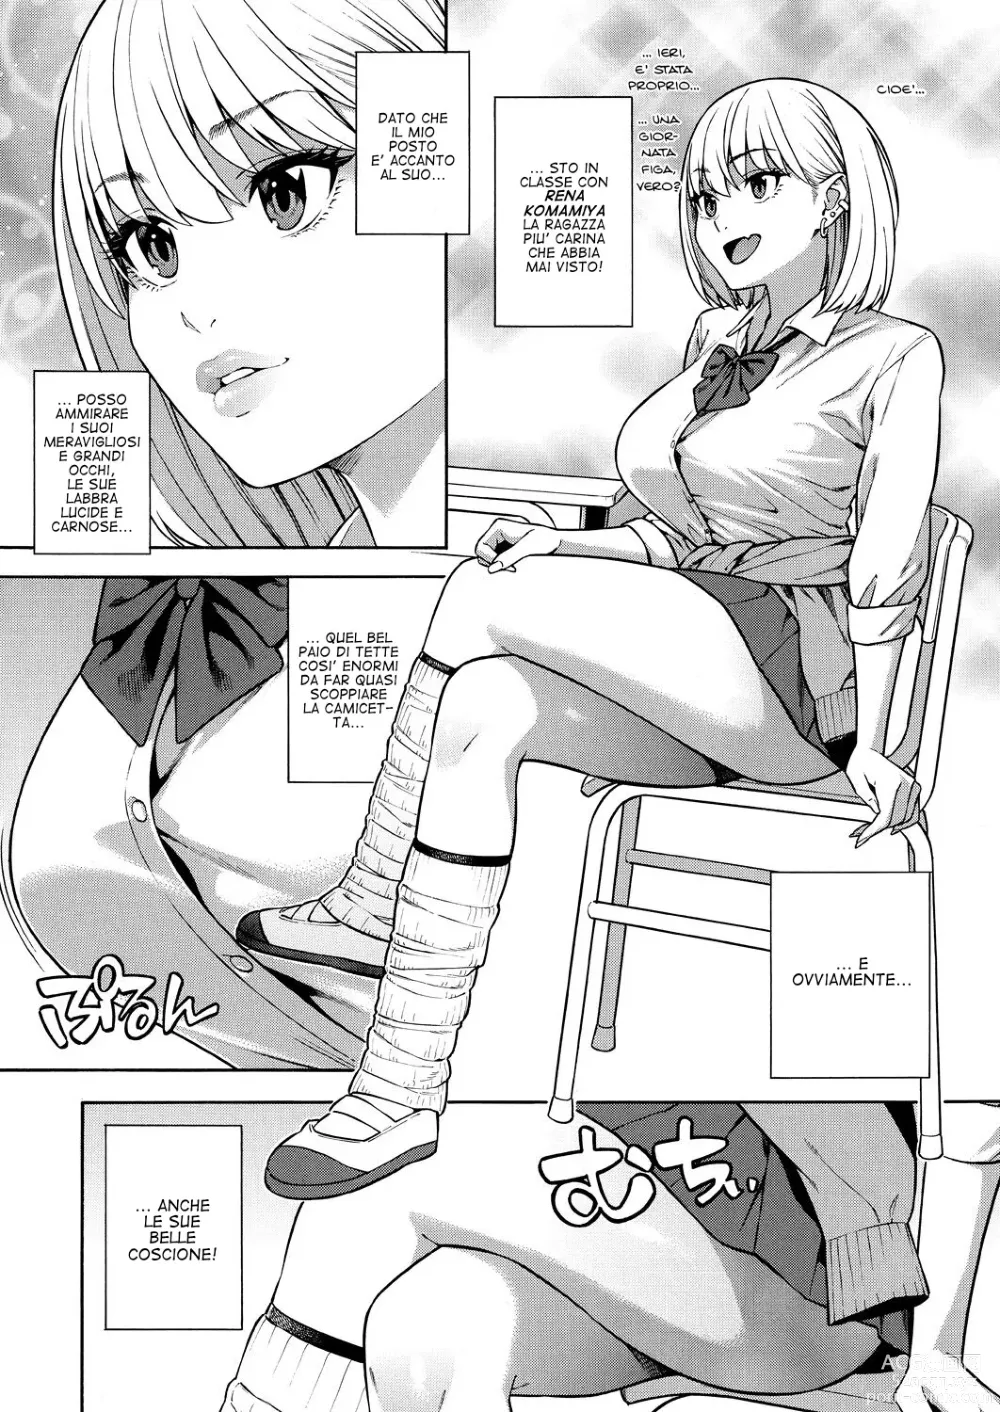 Page 4 of manga Un Harem con tre Sorelle Troie Affamate di Sperma Cap. 1